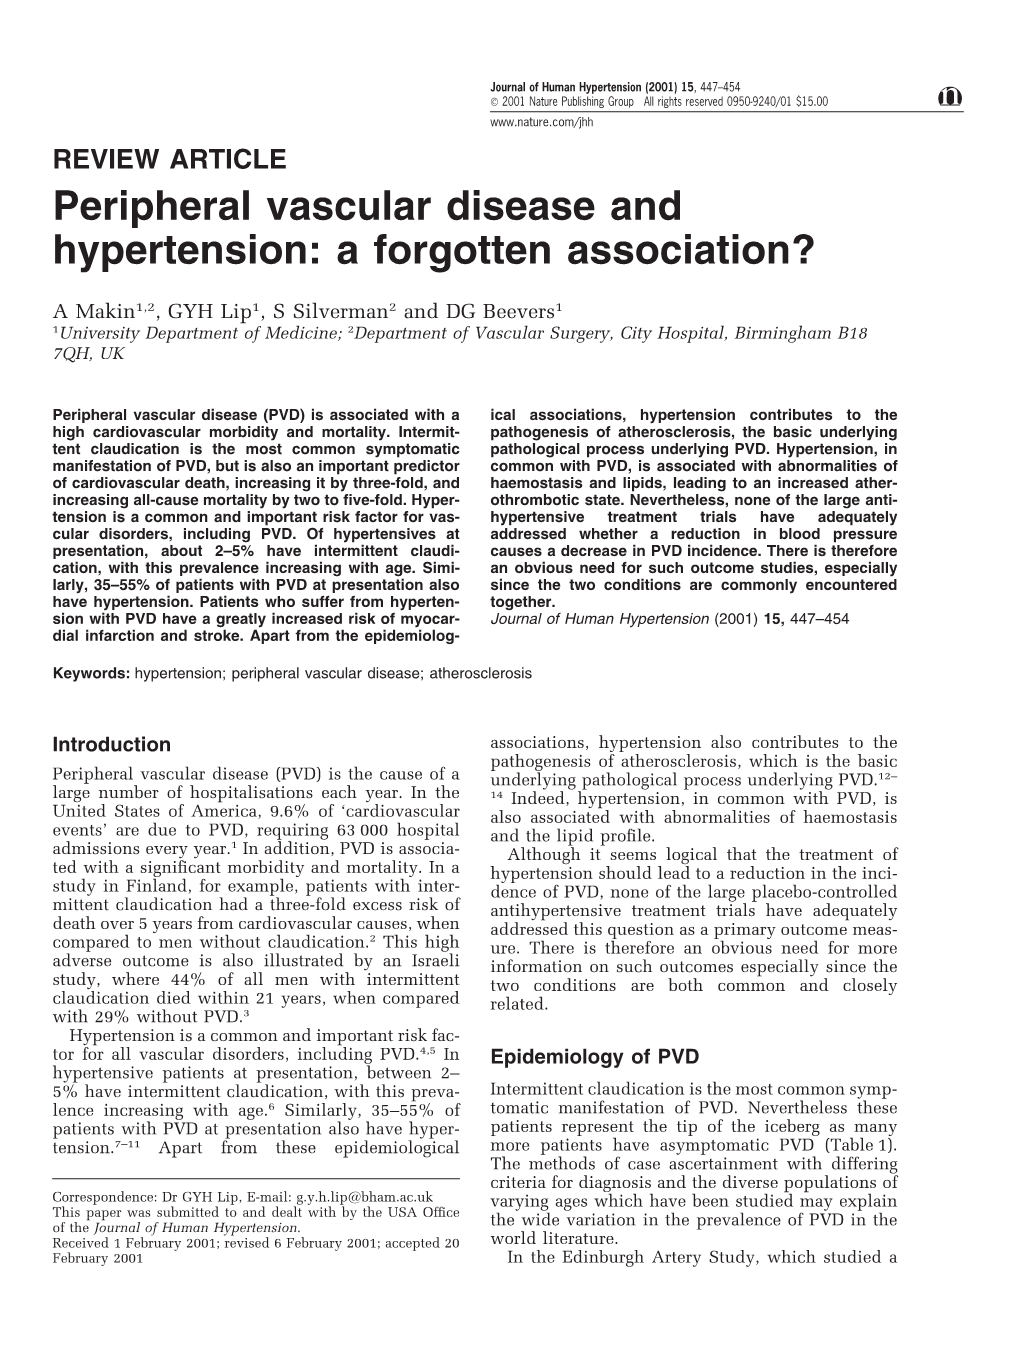 Peripheral Vascular Disease and Hypertension: a Forgotten Association?